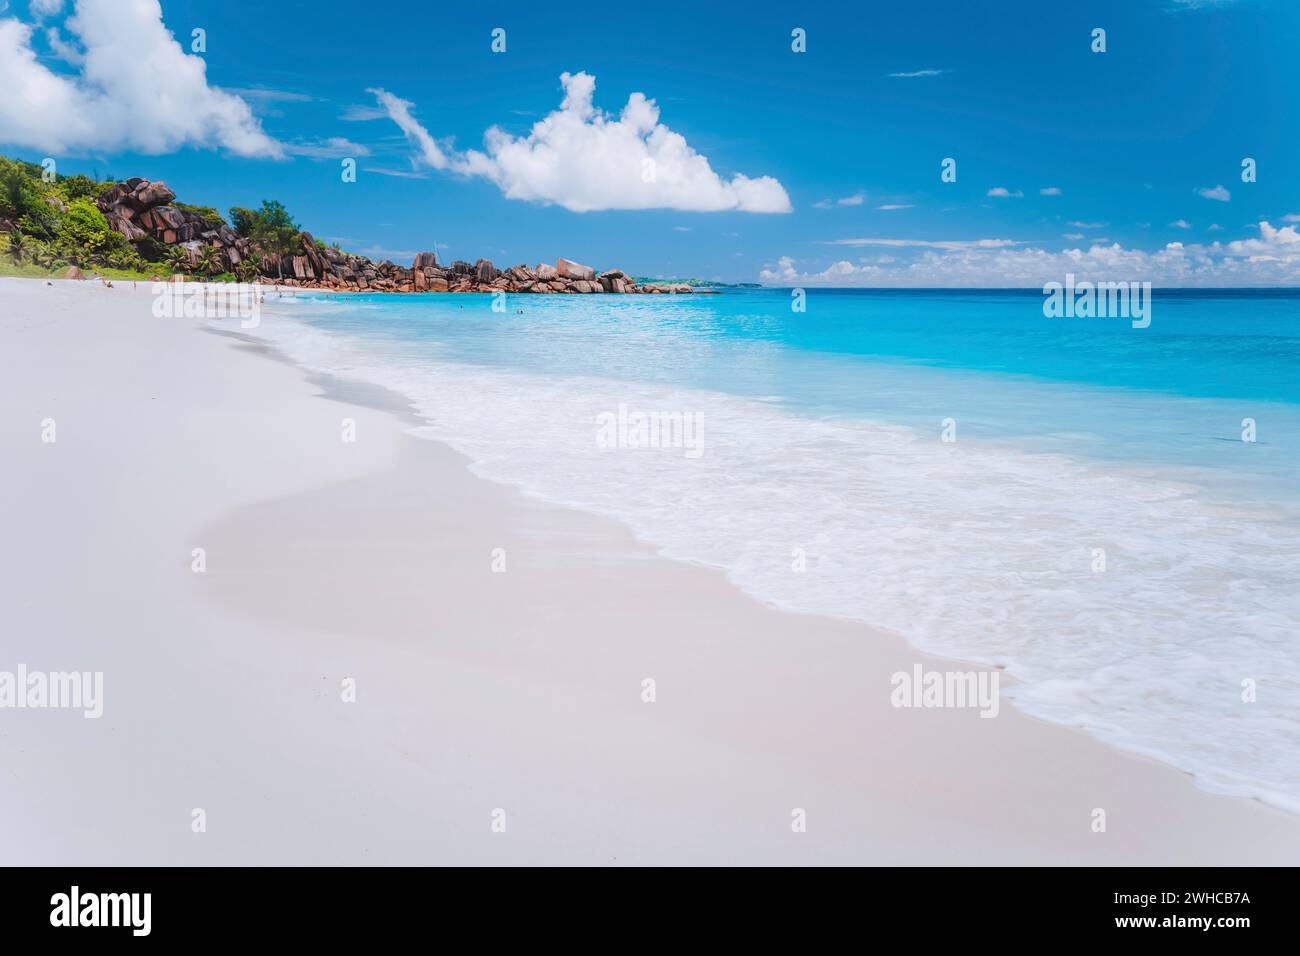 Grand Anse long sandy beach at La Digue island, Seychelles. Holiday vacation travel destination. Stock Photo